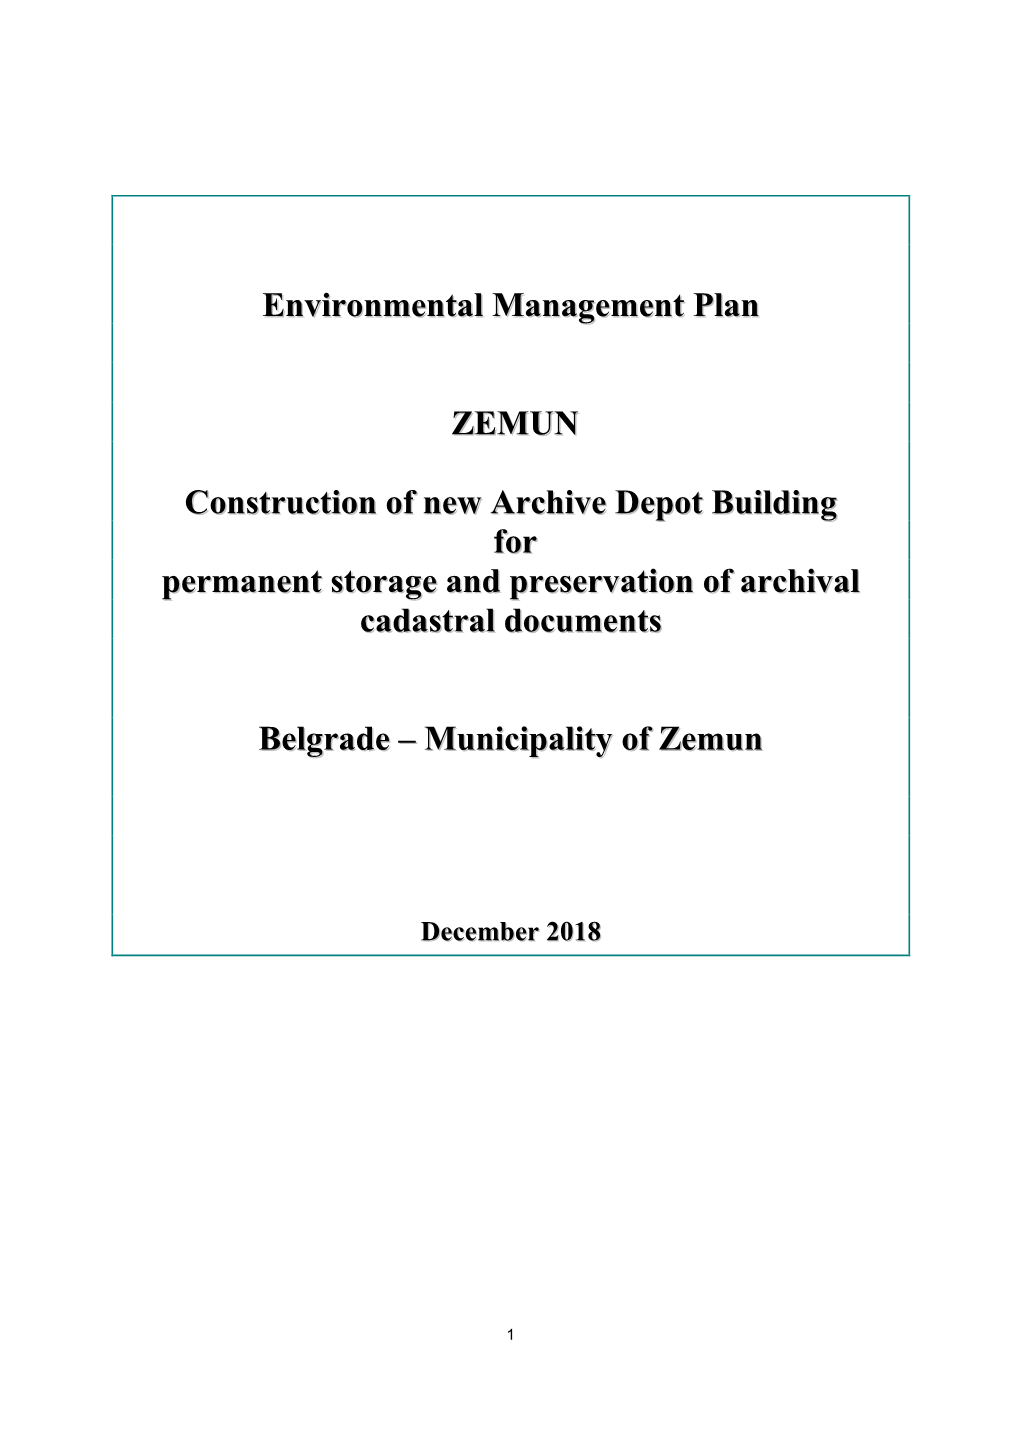 Environmental Management Plan ZEMUN Construction of New